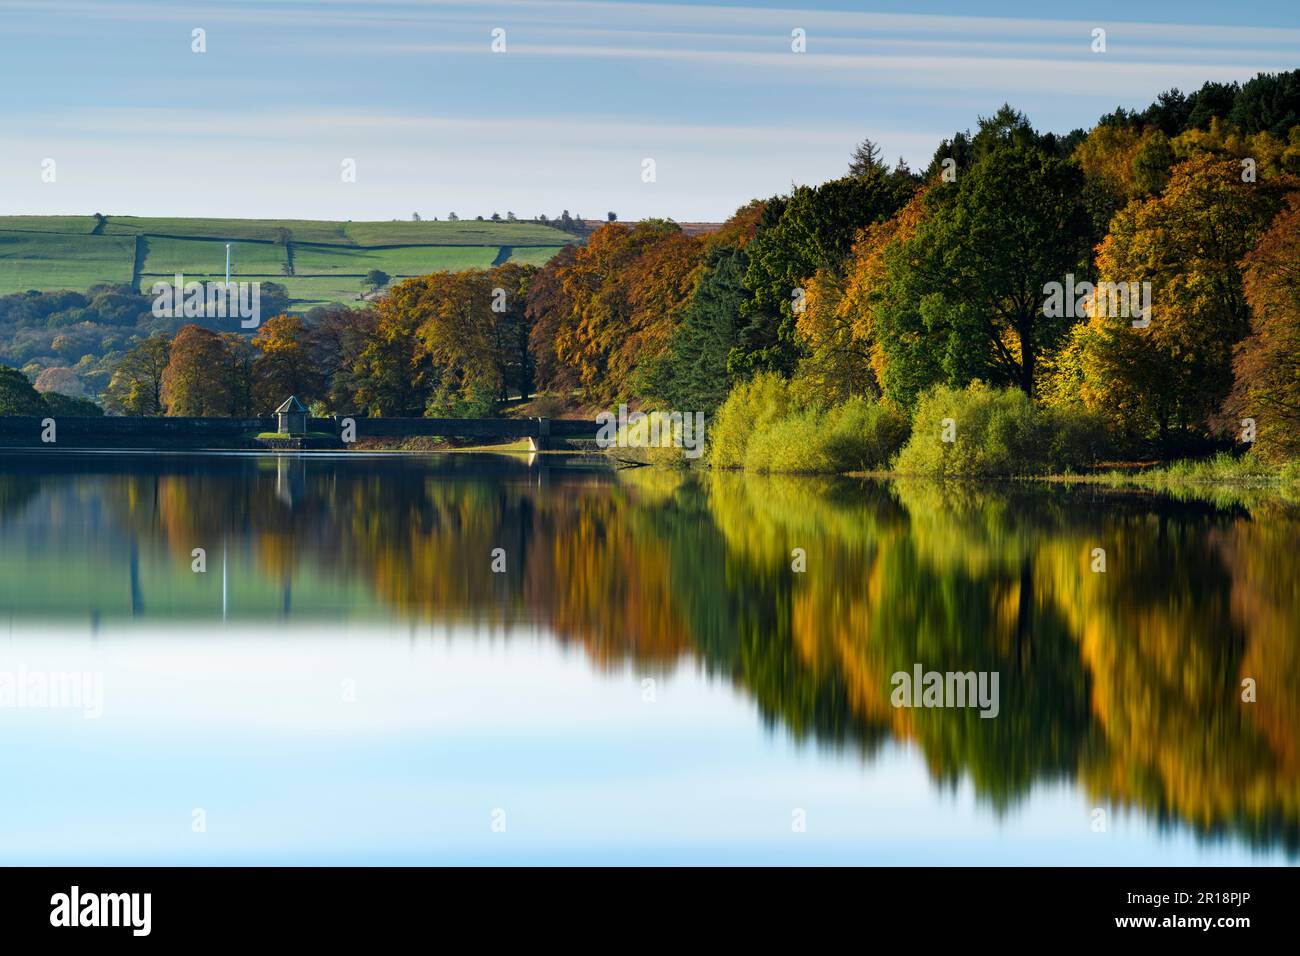 Scenic rural landscape (woodland trees, reflection of colourful foliage & leaves on still calm sunlit lake, blue sky) - Swinsty Reservoir, England UK. Stock Photo